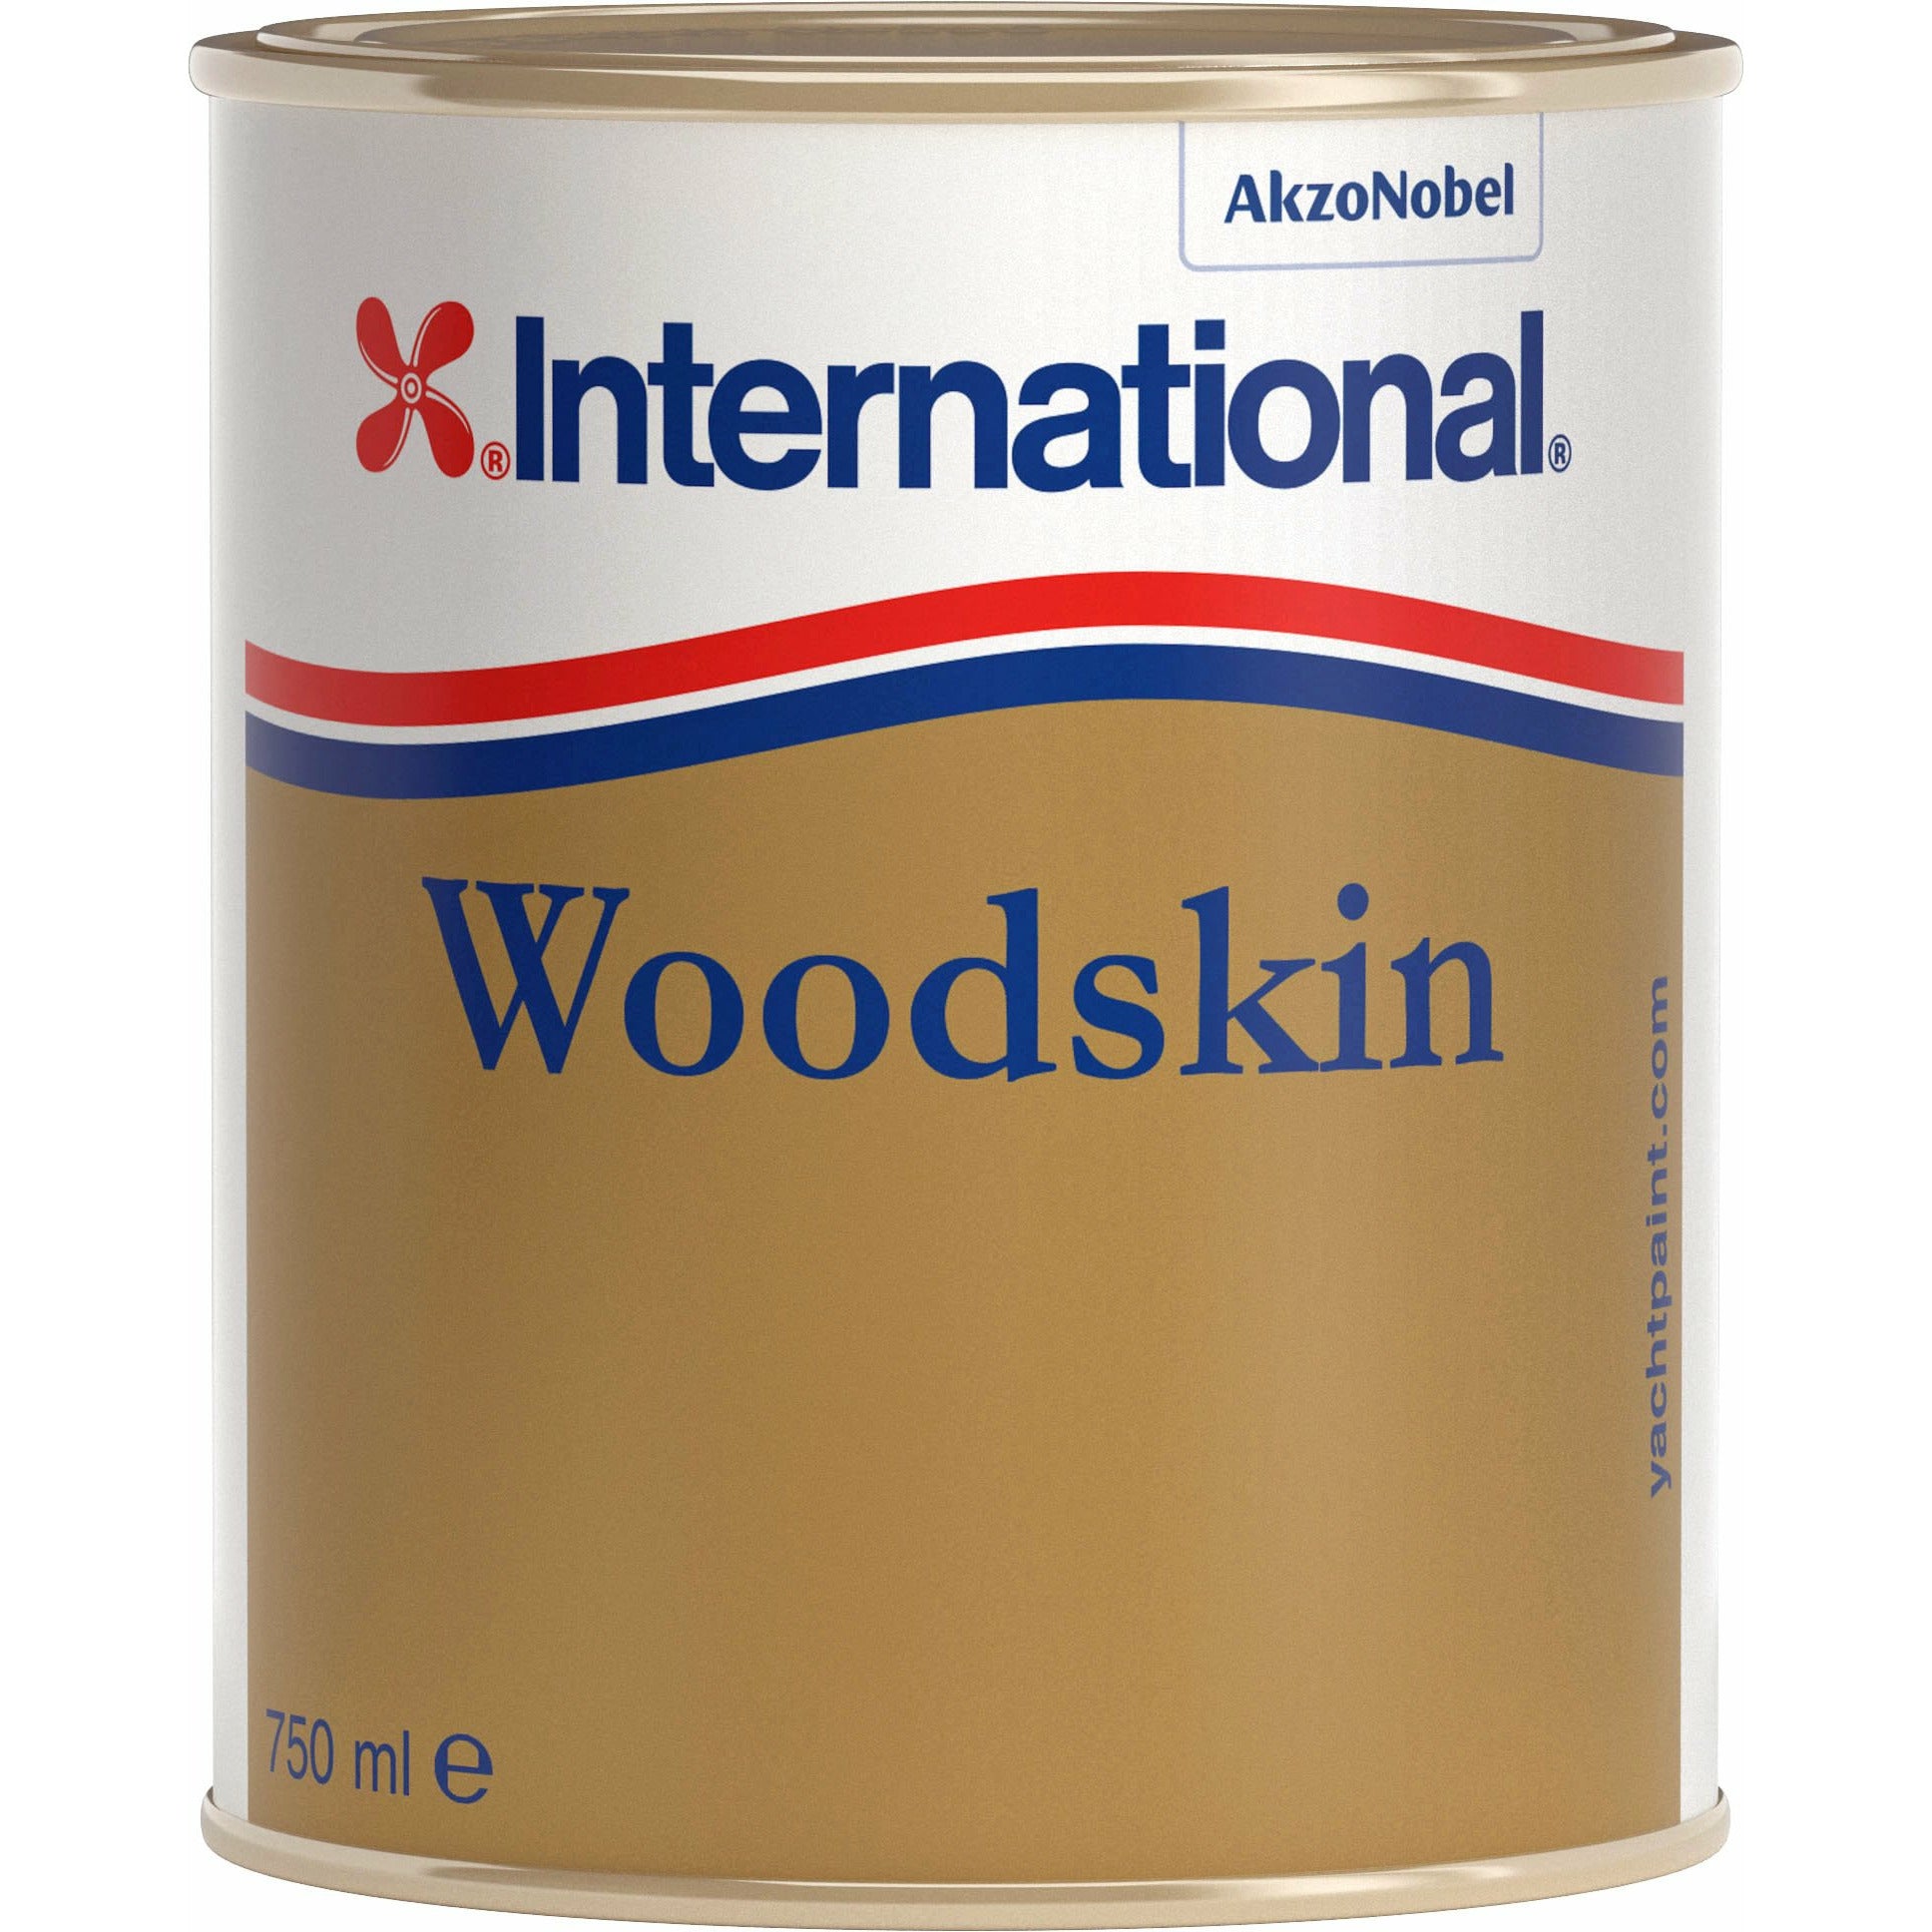 International Woodskin